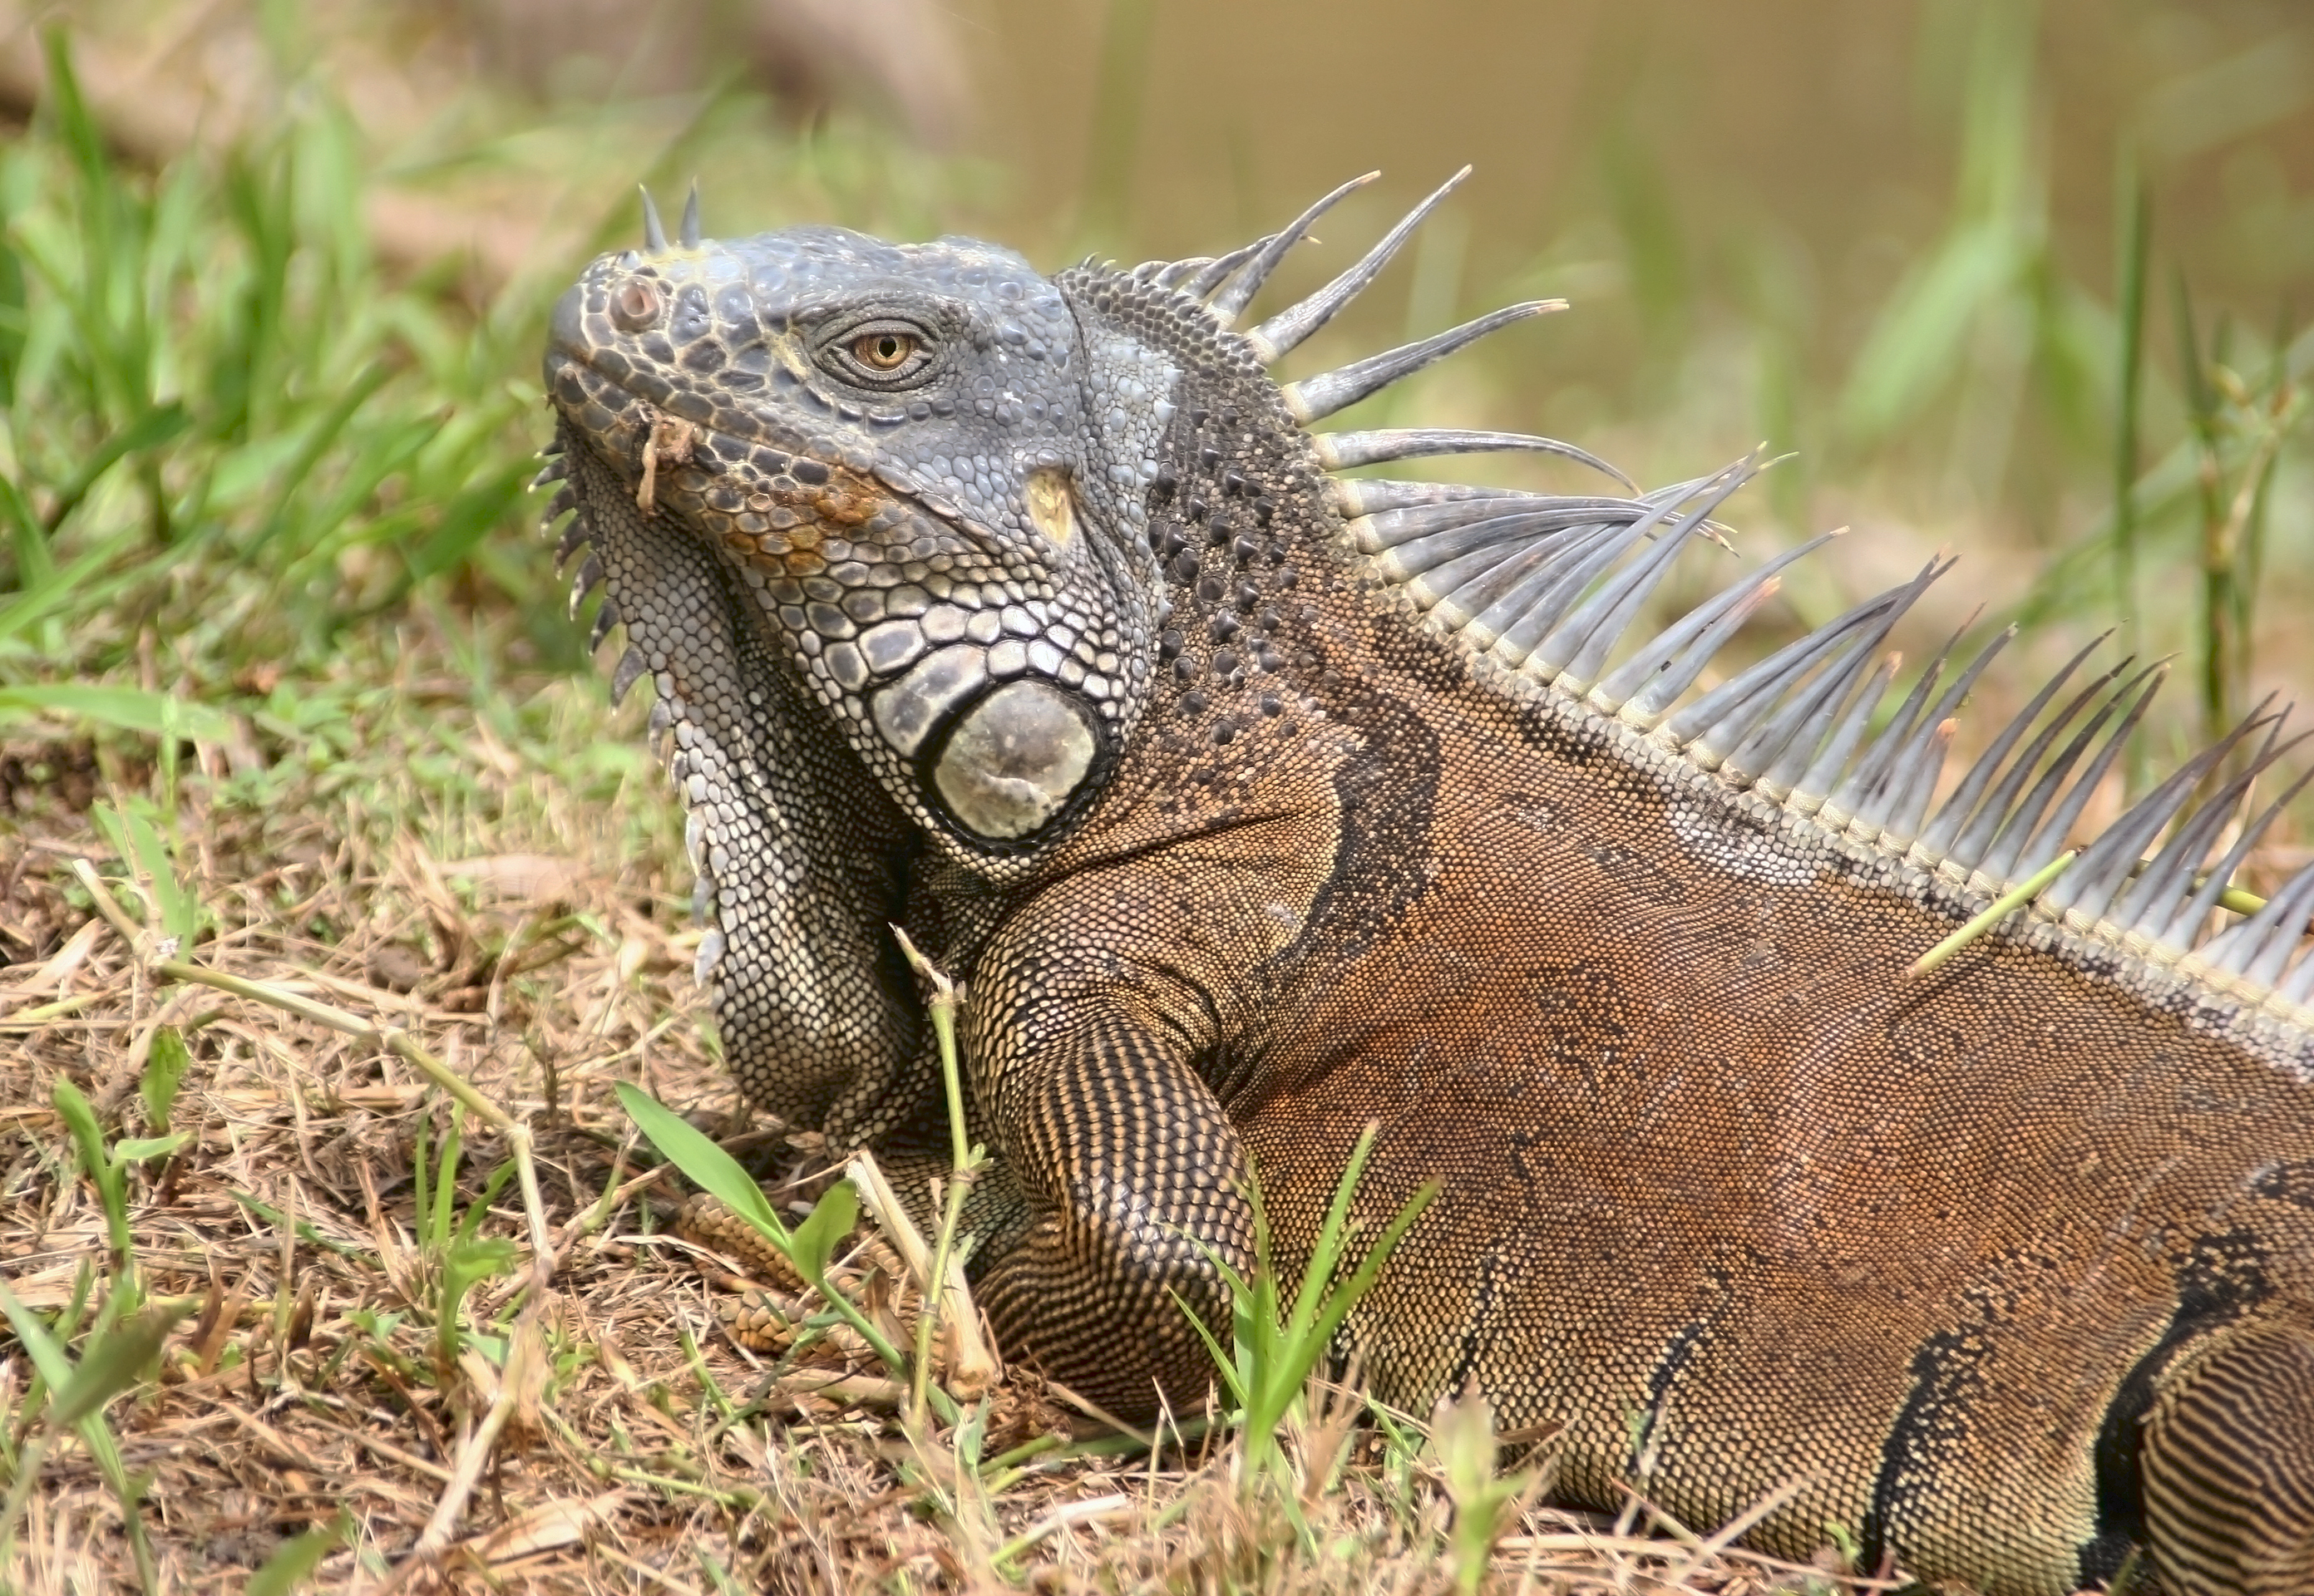 Iguana, Belize